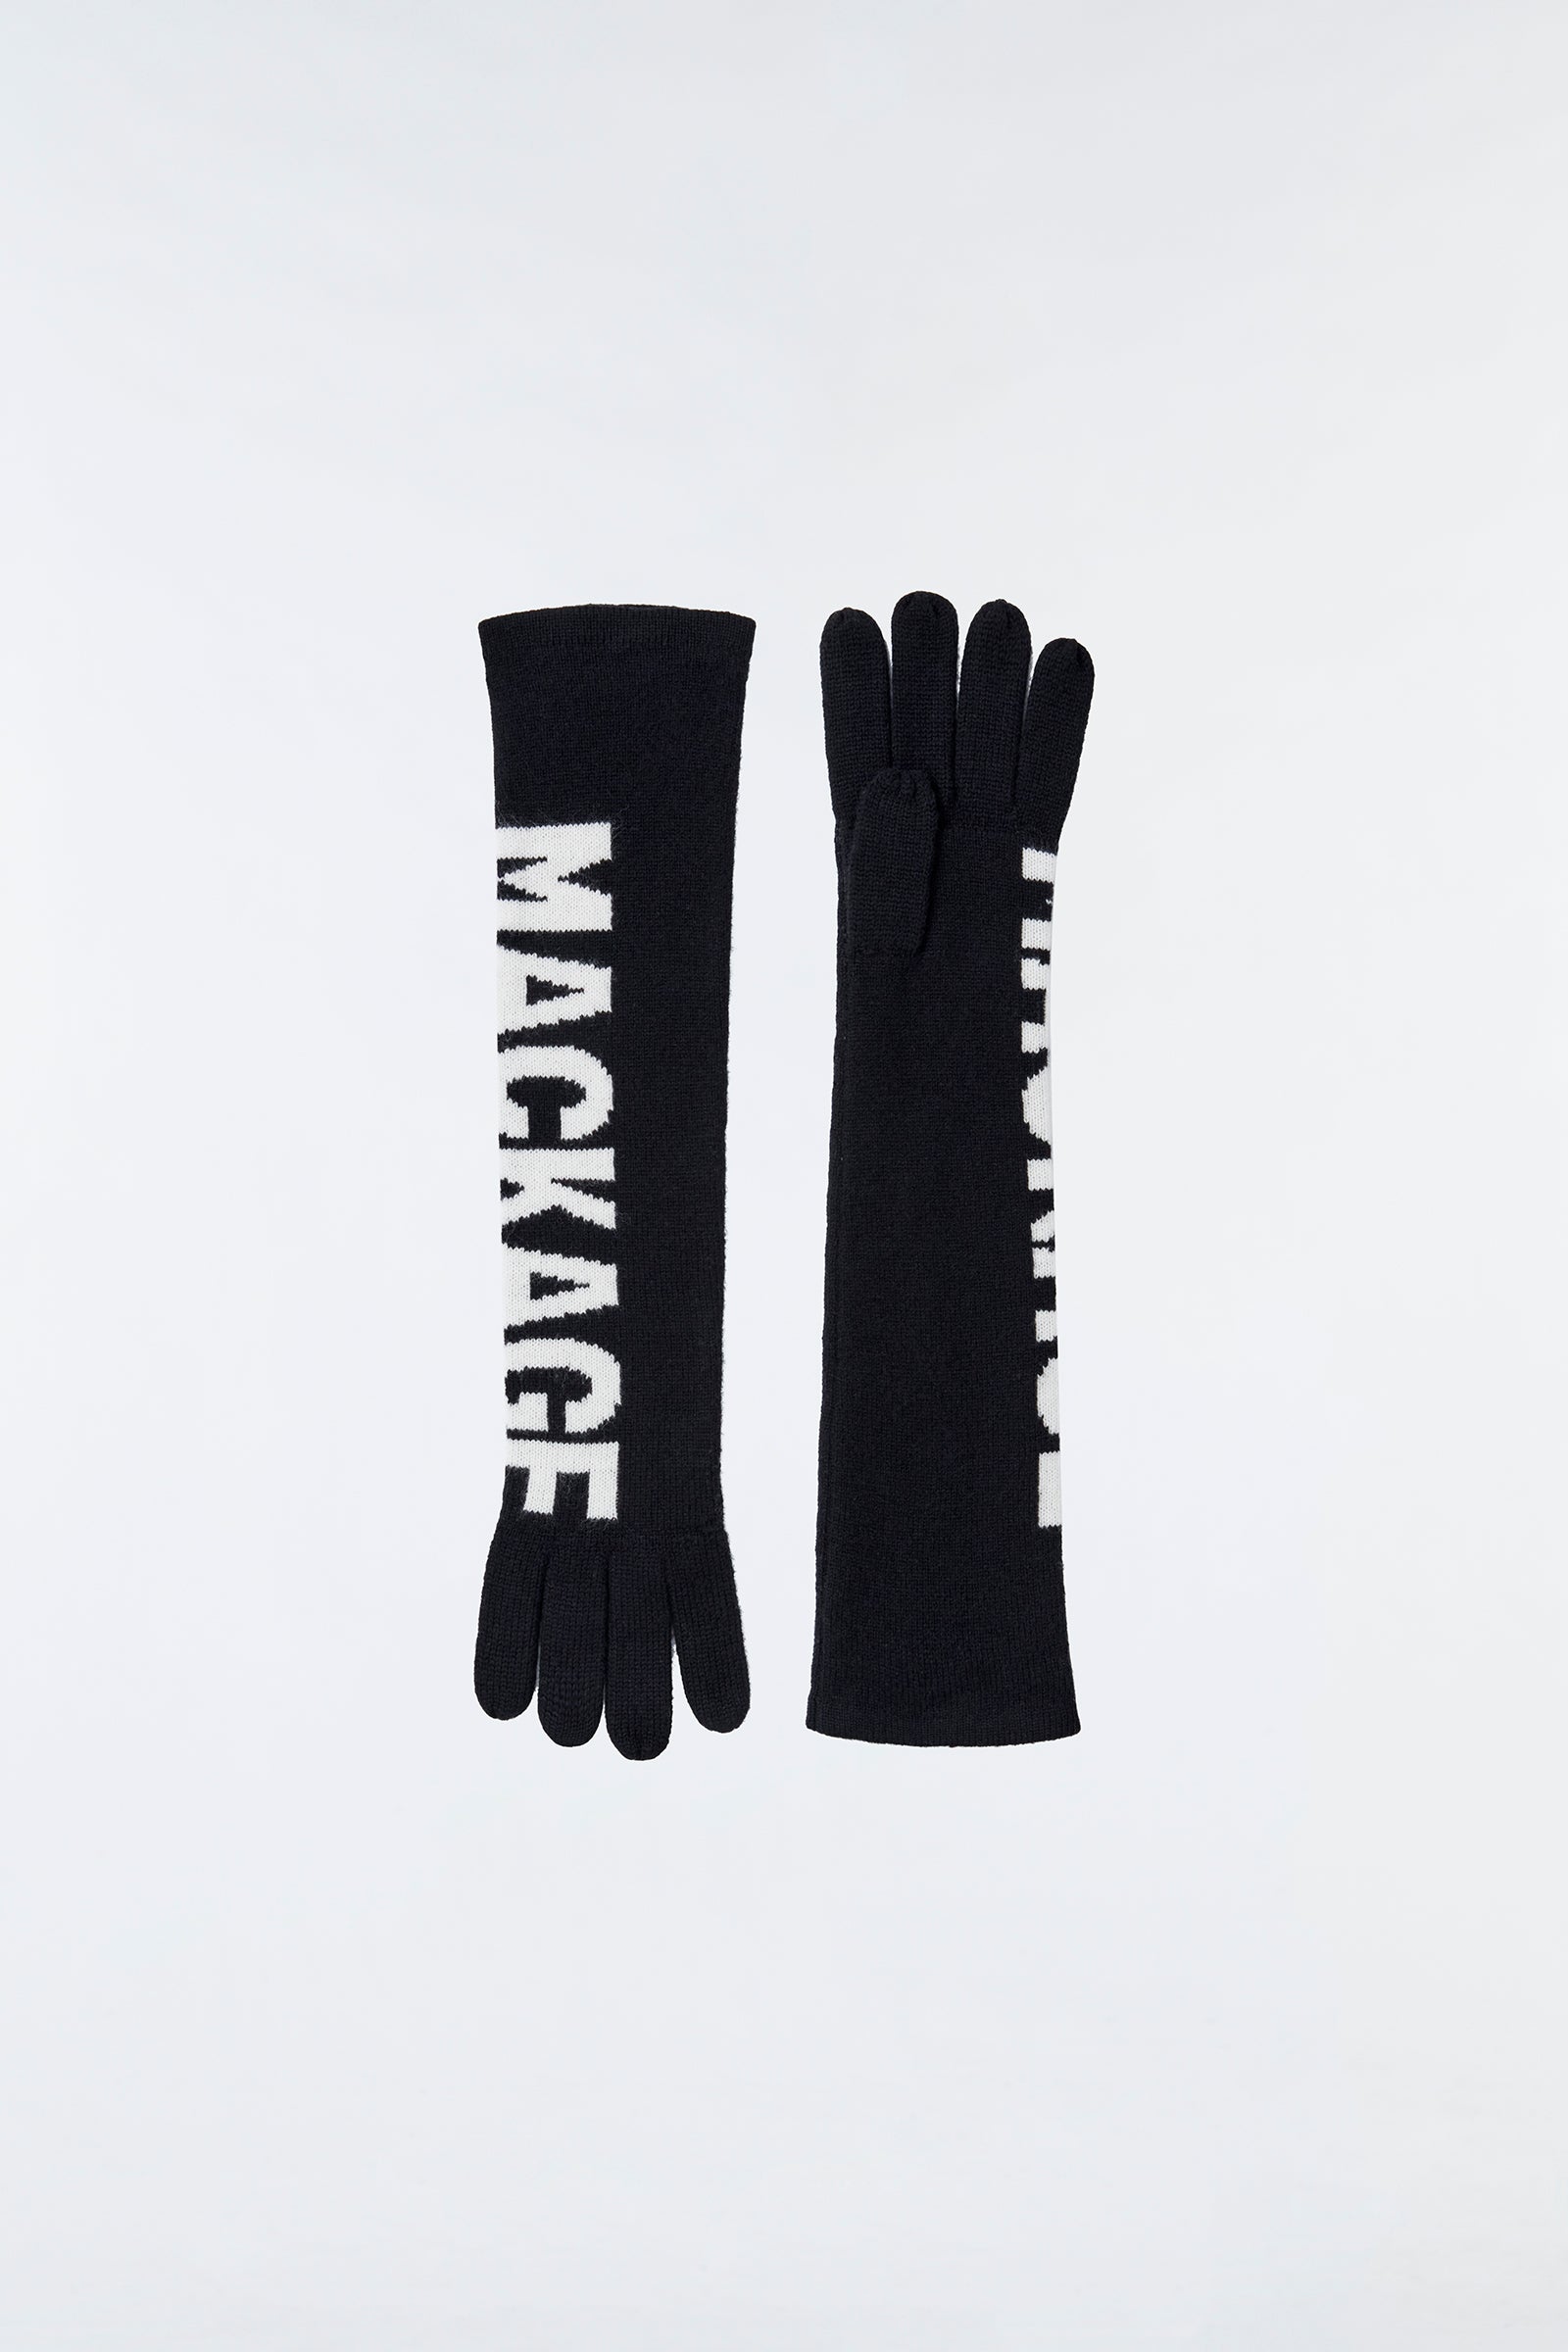 Mackage BIMINI - Black / O/S. 1